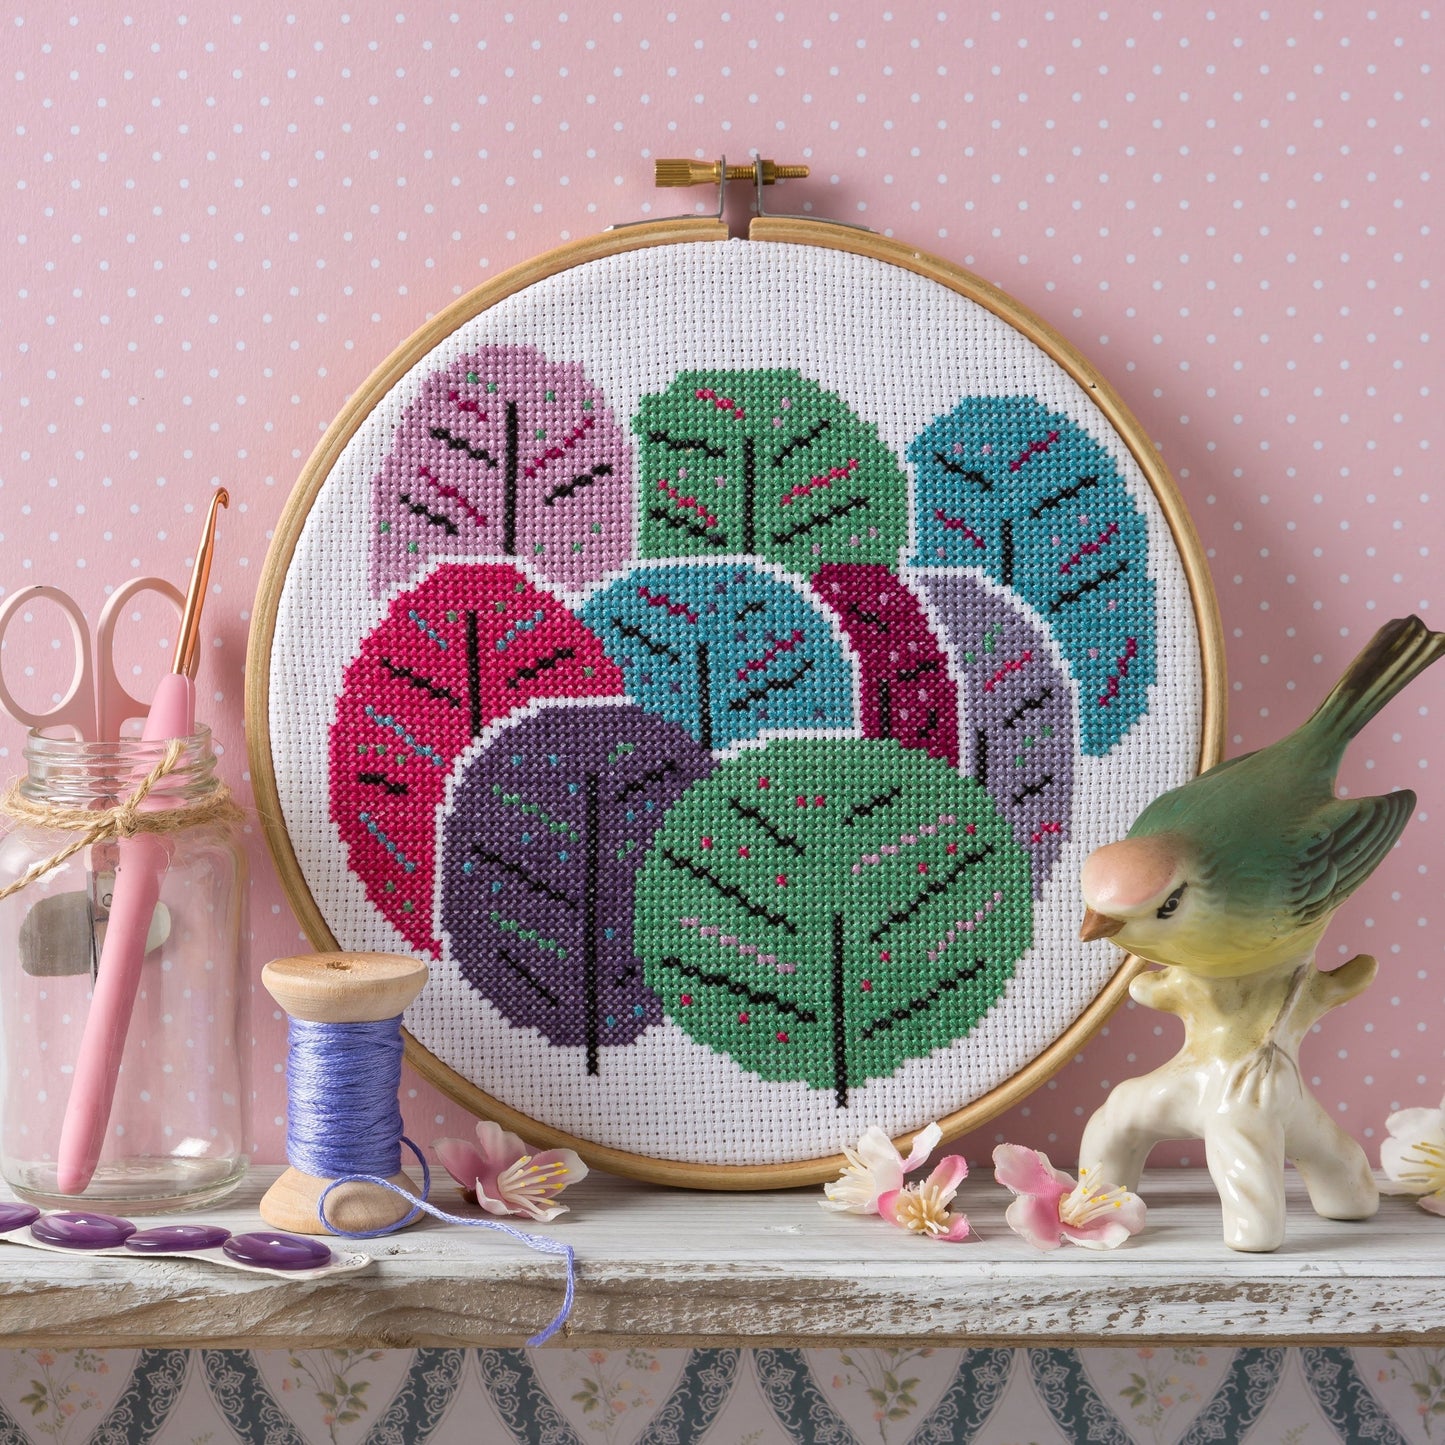 Hawthorne Handmade Spring Trees cross stitch kit